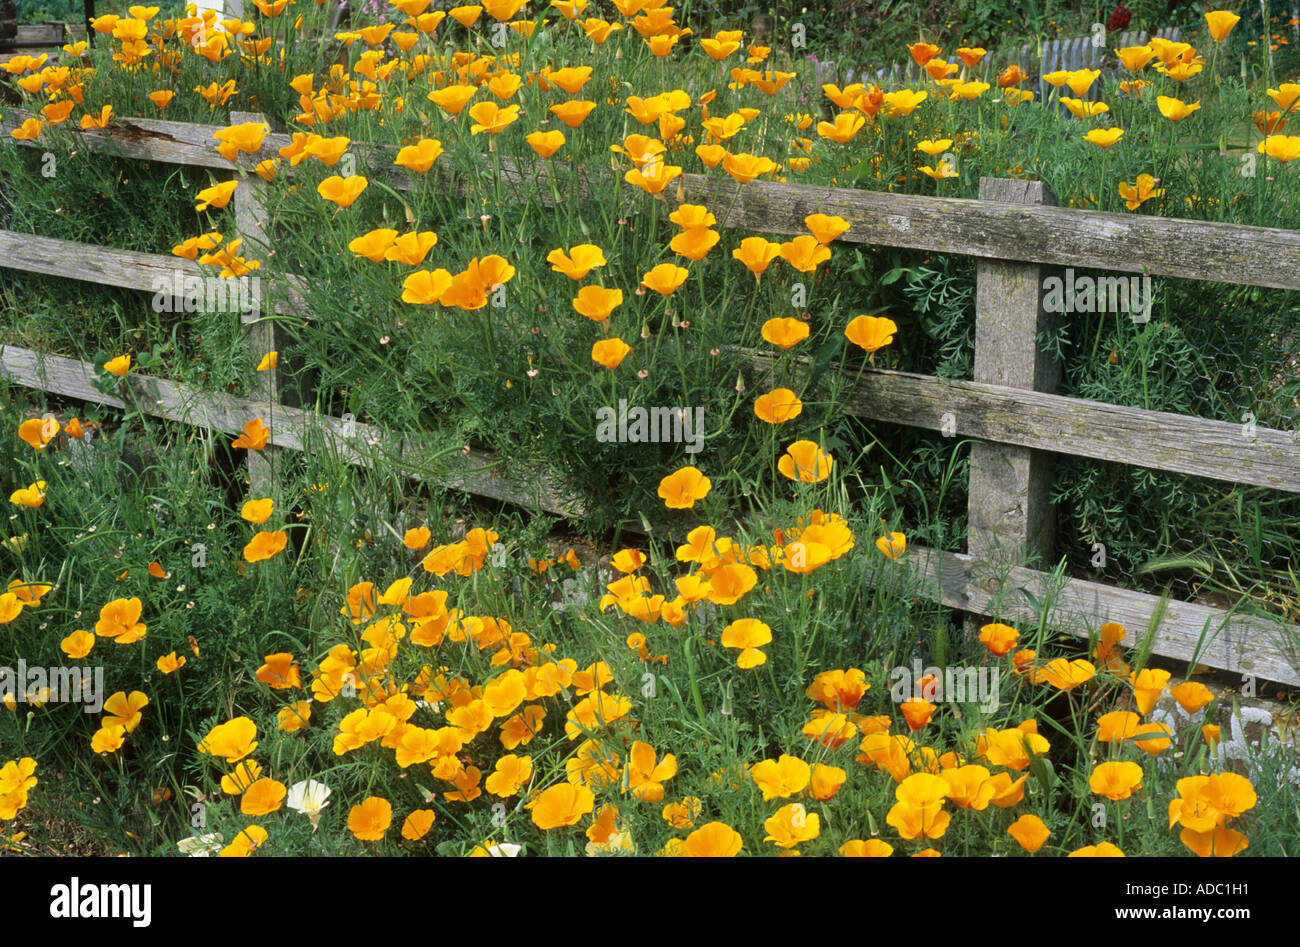 Meconopsis cambrica, Gallese papavero, fiore di arancia, giardino recinto Foto Stock